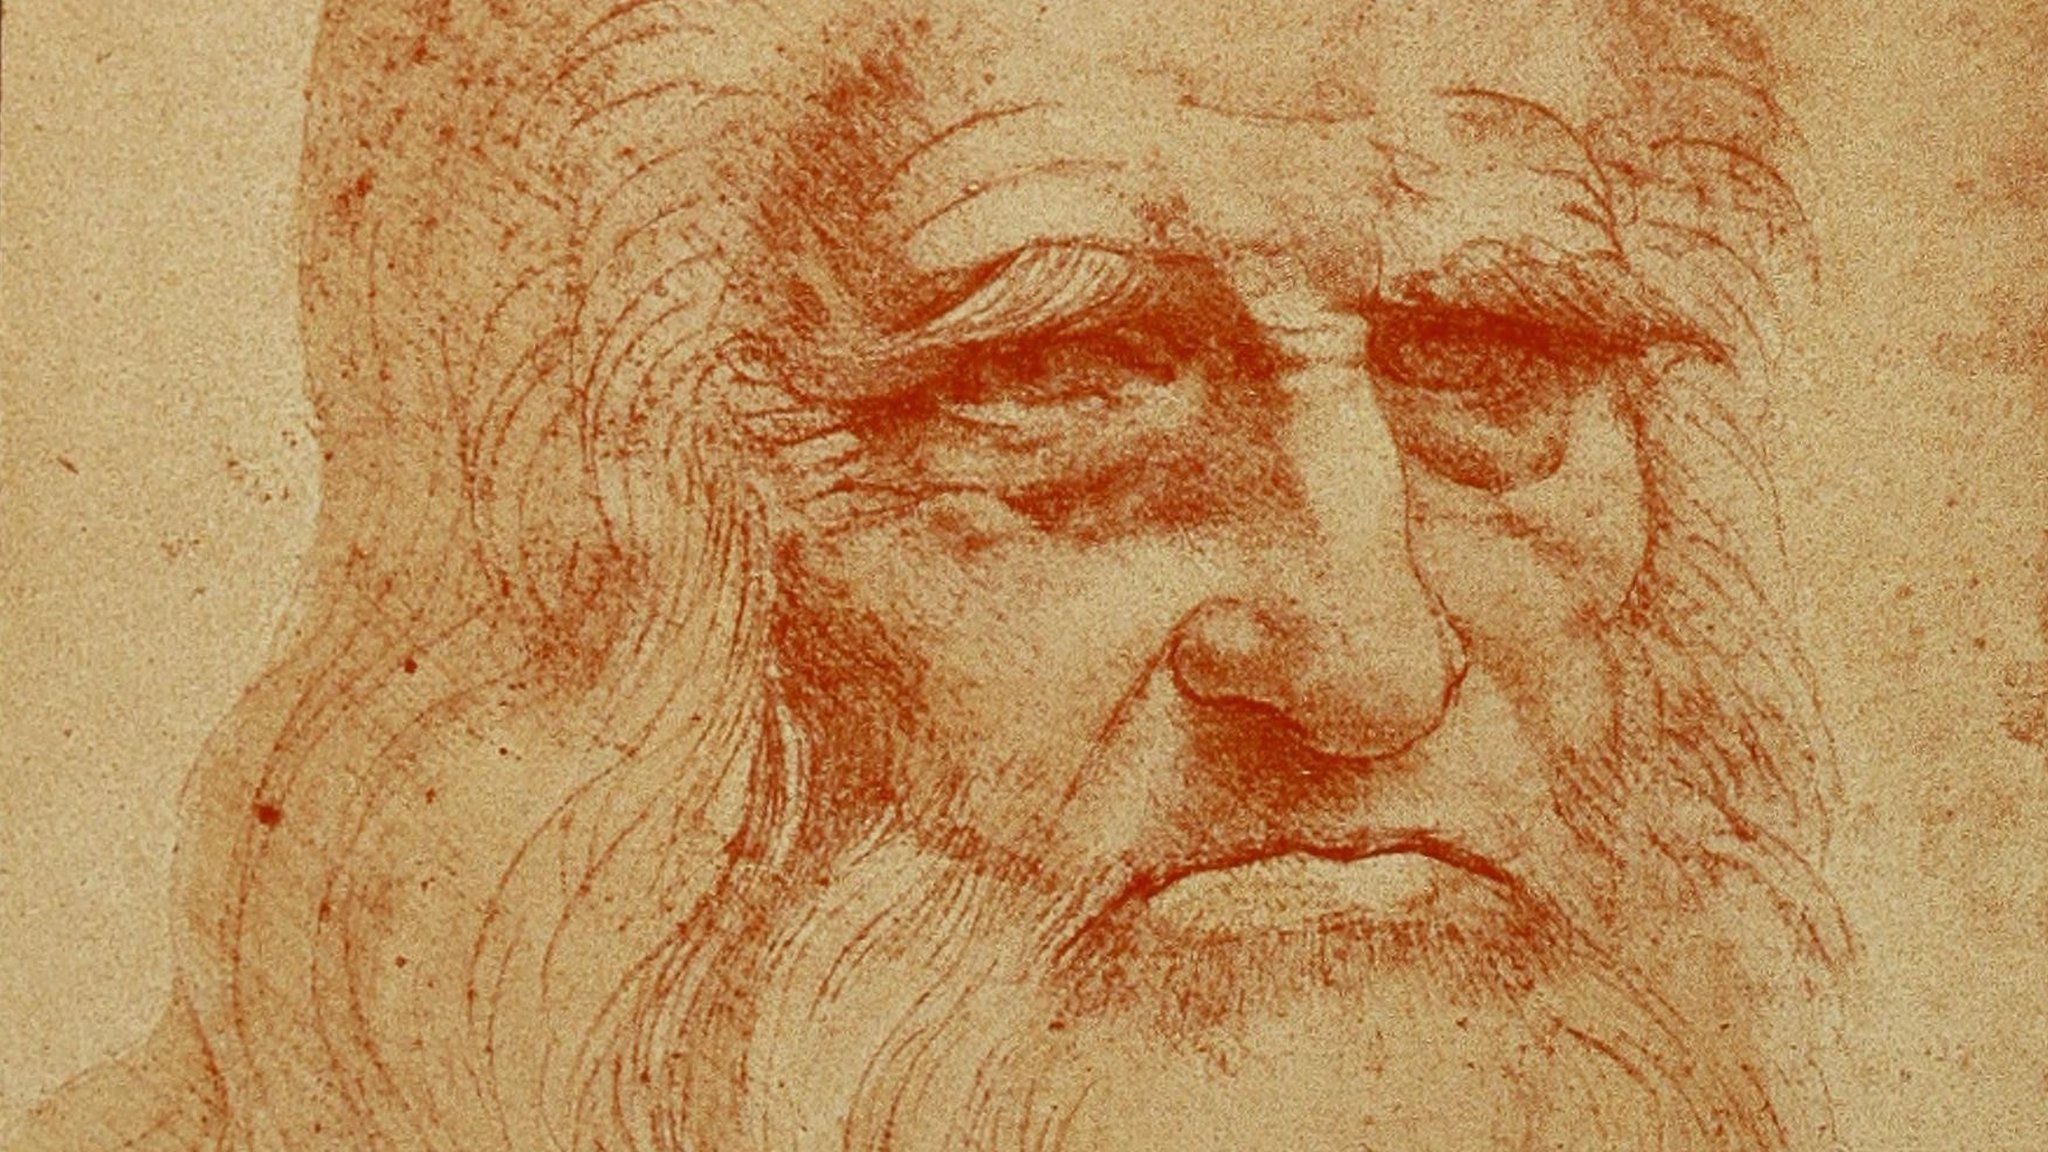 Leonardo Da Vinci Portrait Of A Man - HD Wallpaper 